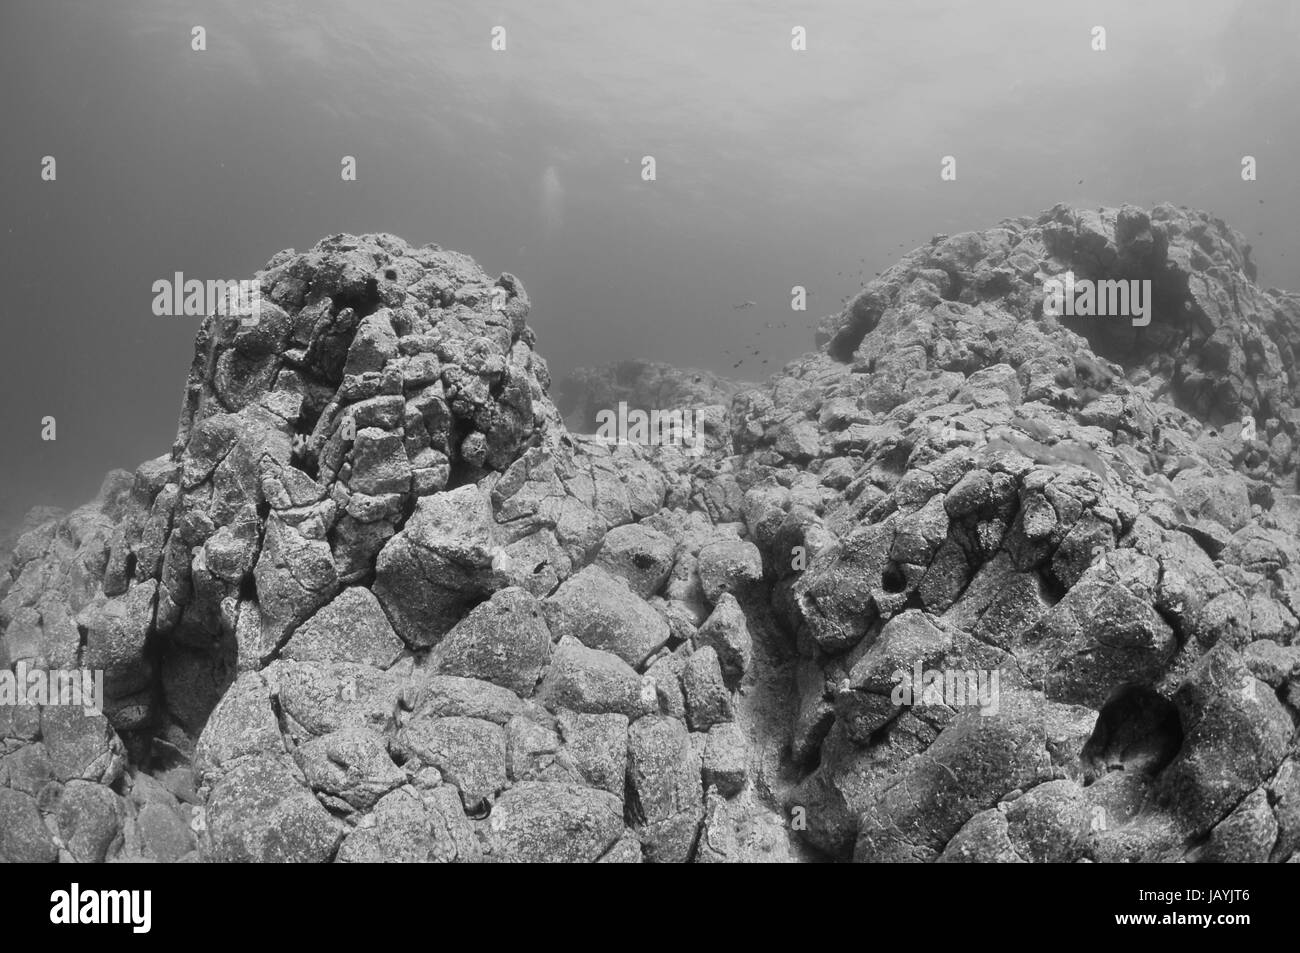 Underwater volcanic scene showing massive rocks in the Atlantic Stock Photo